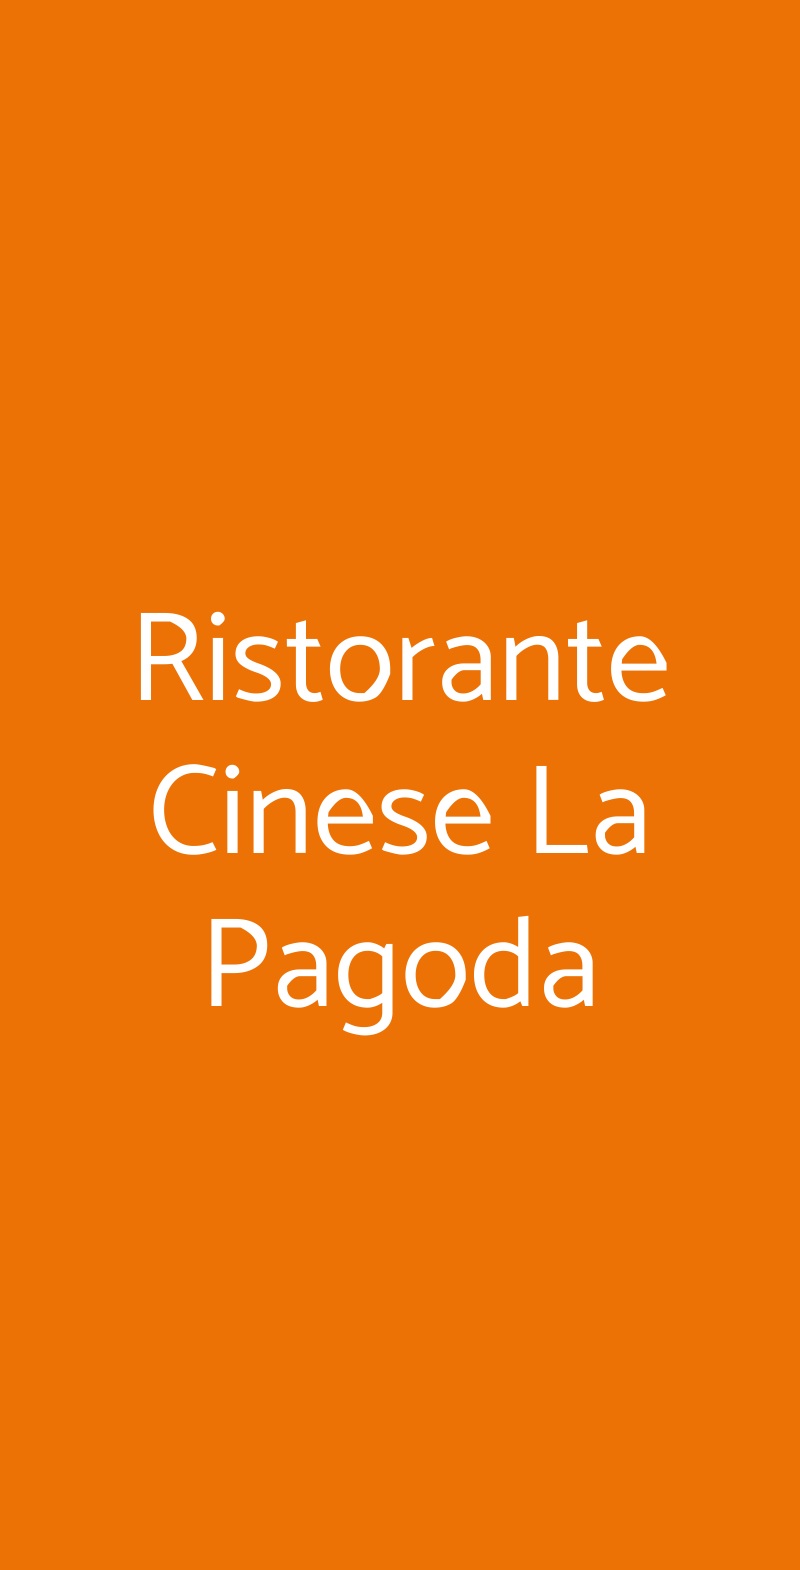 Ristorante Cinese La Pagoda Verona menù 1 pagina